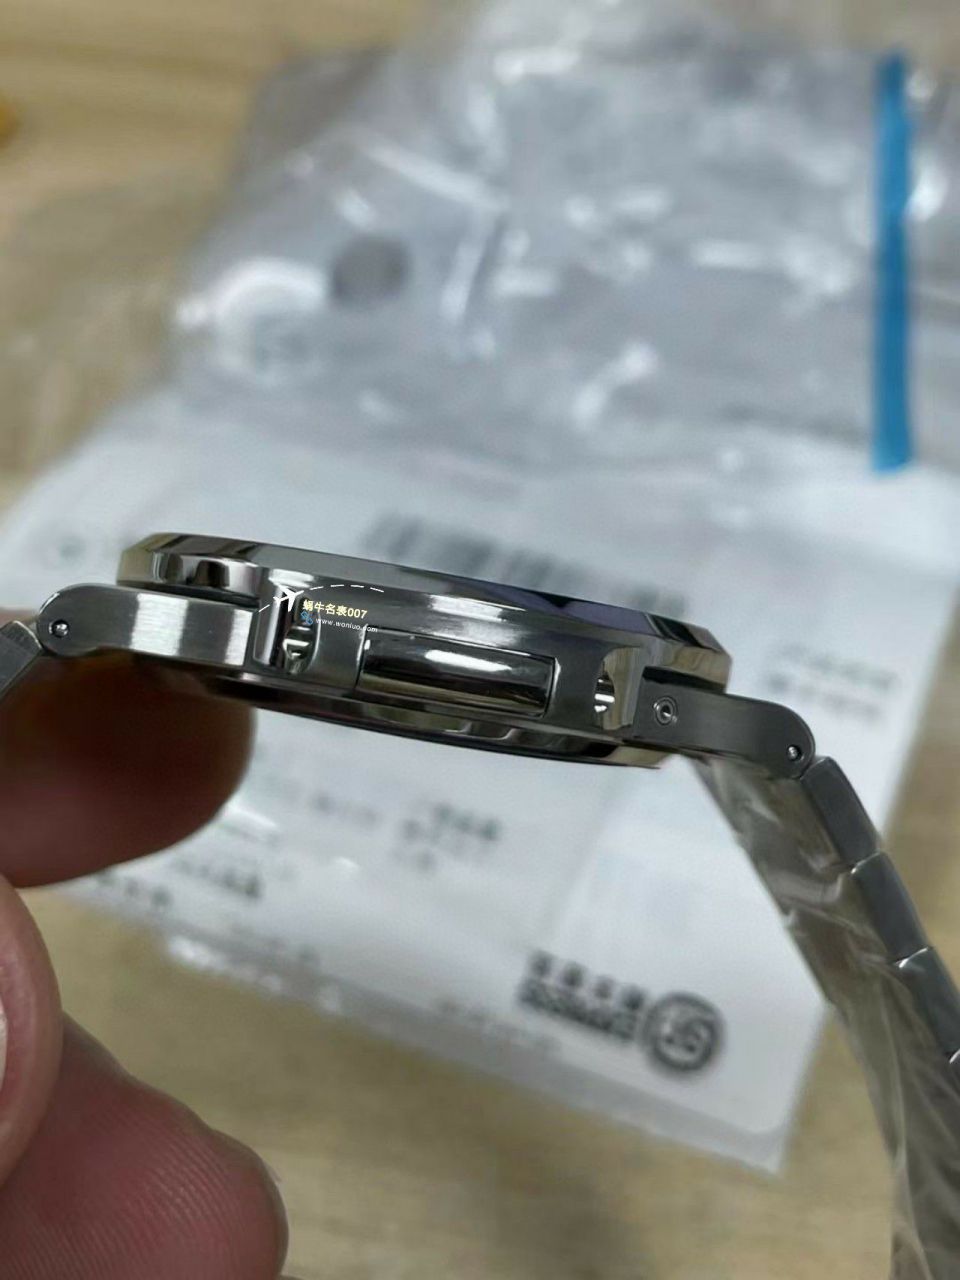 PPF厂百达翡丽鹦鹉螺一比一复刻高仿手表5712/1A-001腕表 / BD370